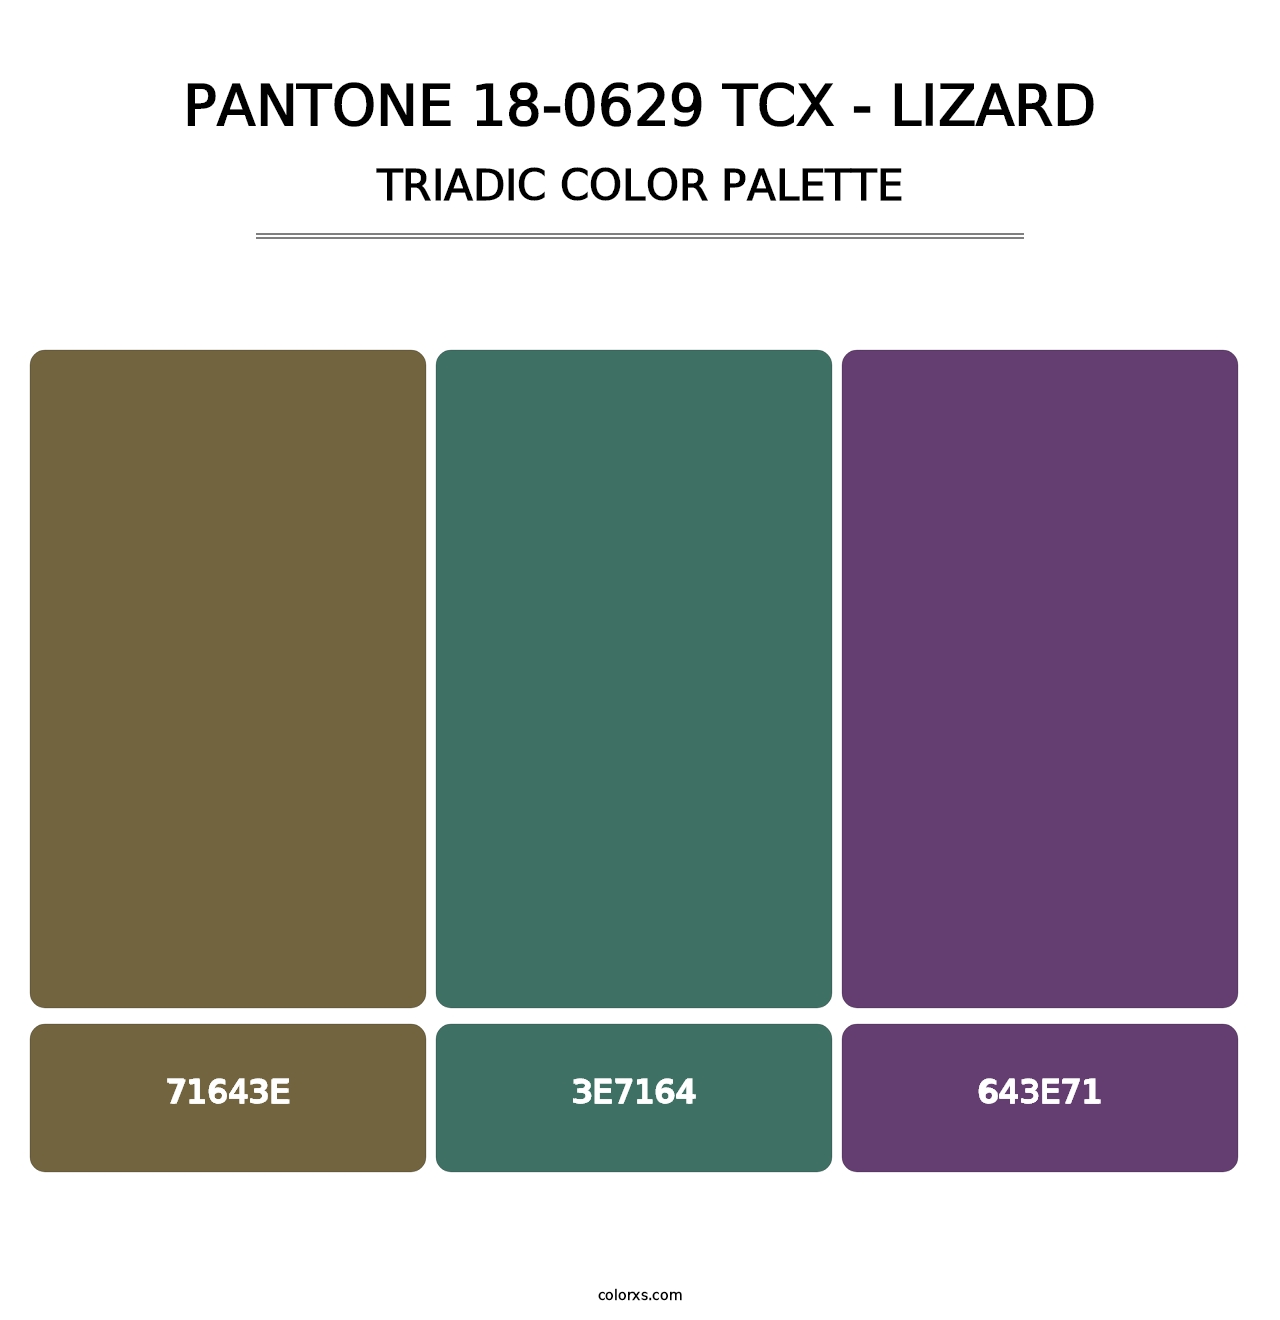 PANTONE 18-0629 TCX - Lizard - Triadic Color Palette